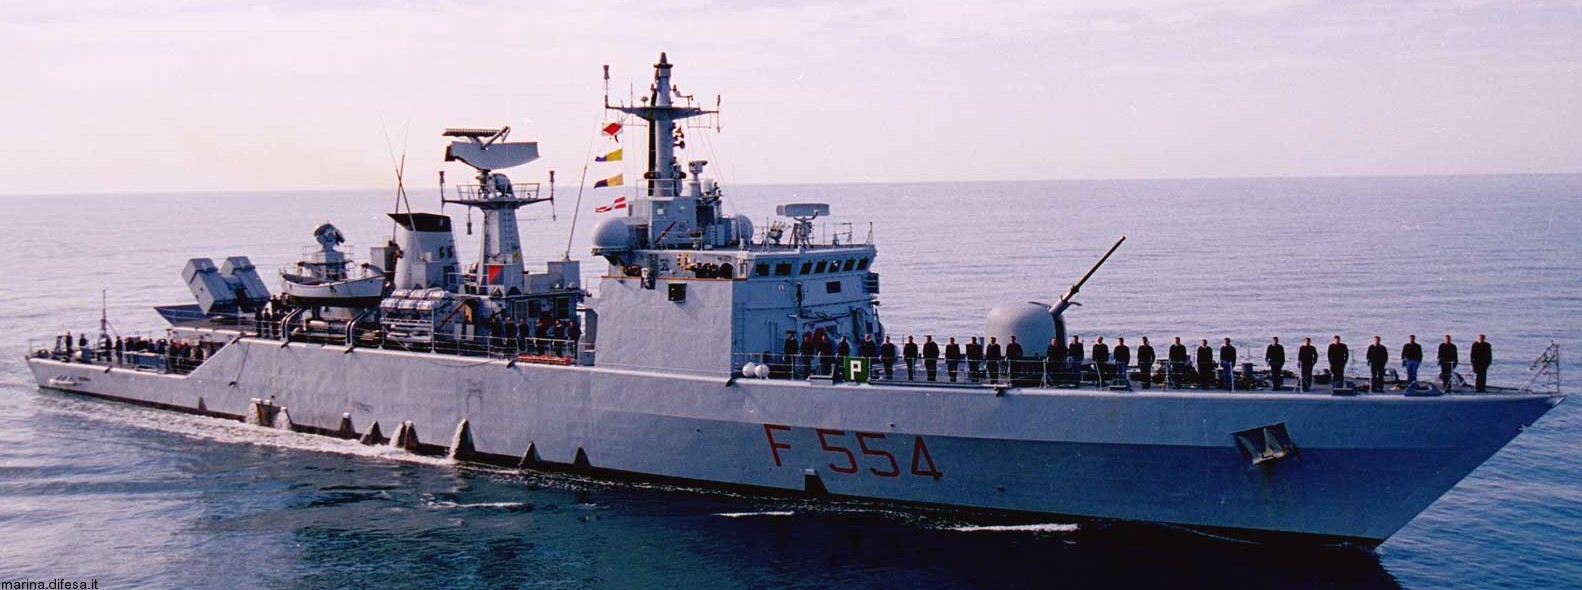 f-554 sfinge nave its minerva class corvette italian navy marina militare 27 albatros aspide missile